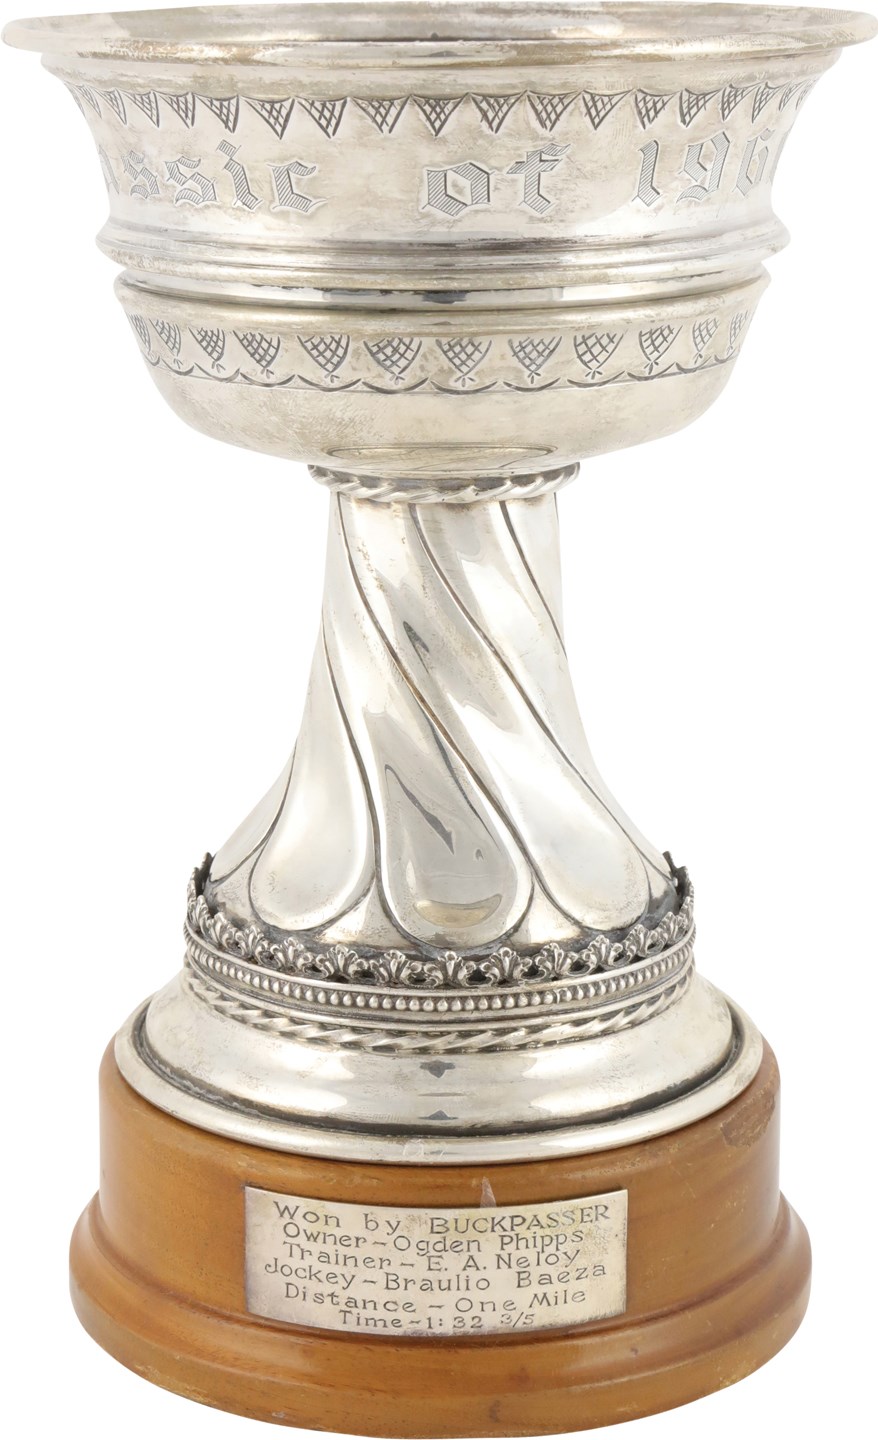 "Buckpasser" 1966 Arlington Classic "World Record" Silver Trophy